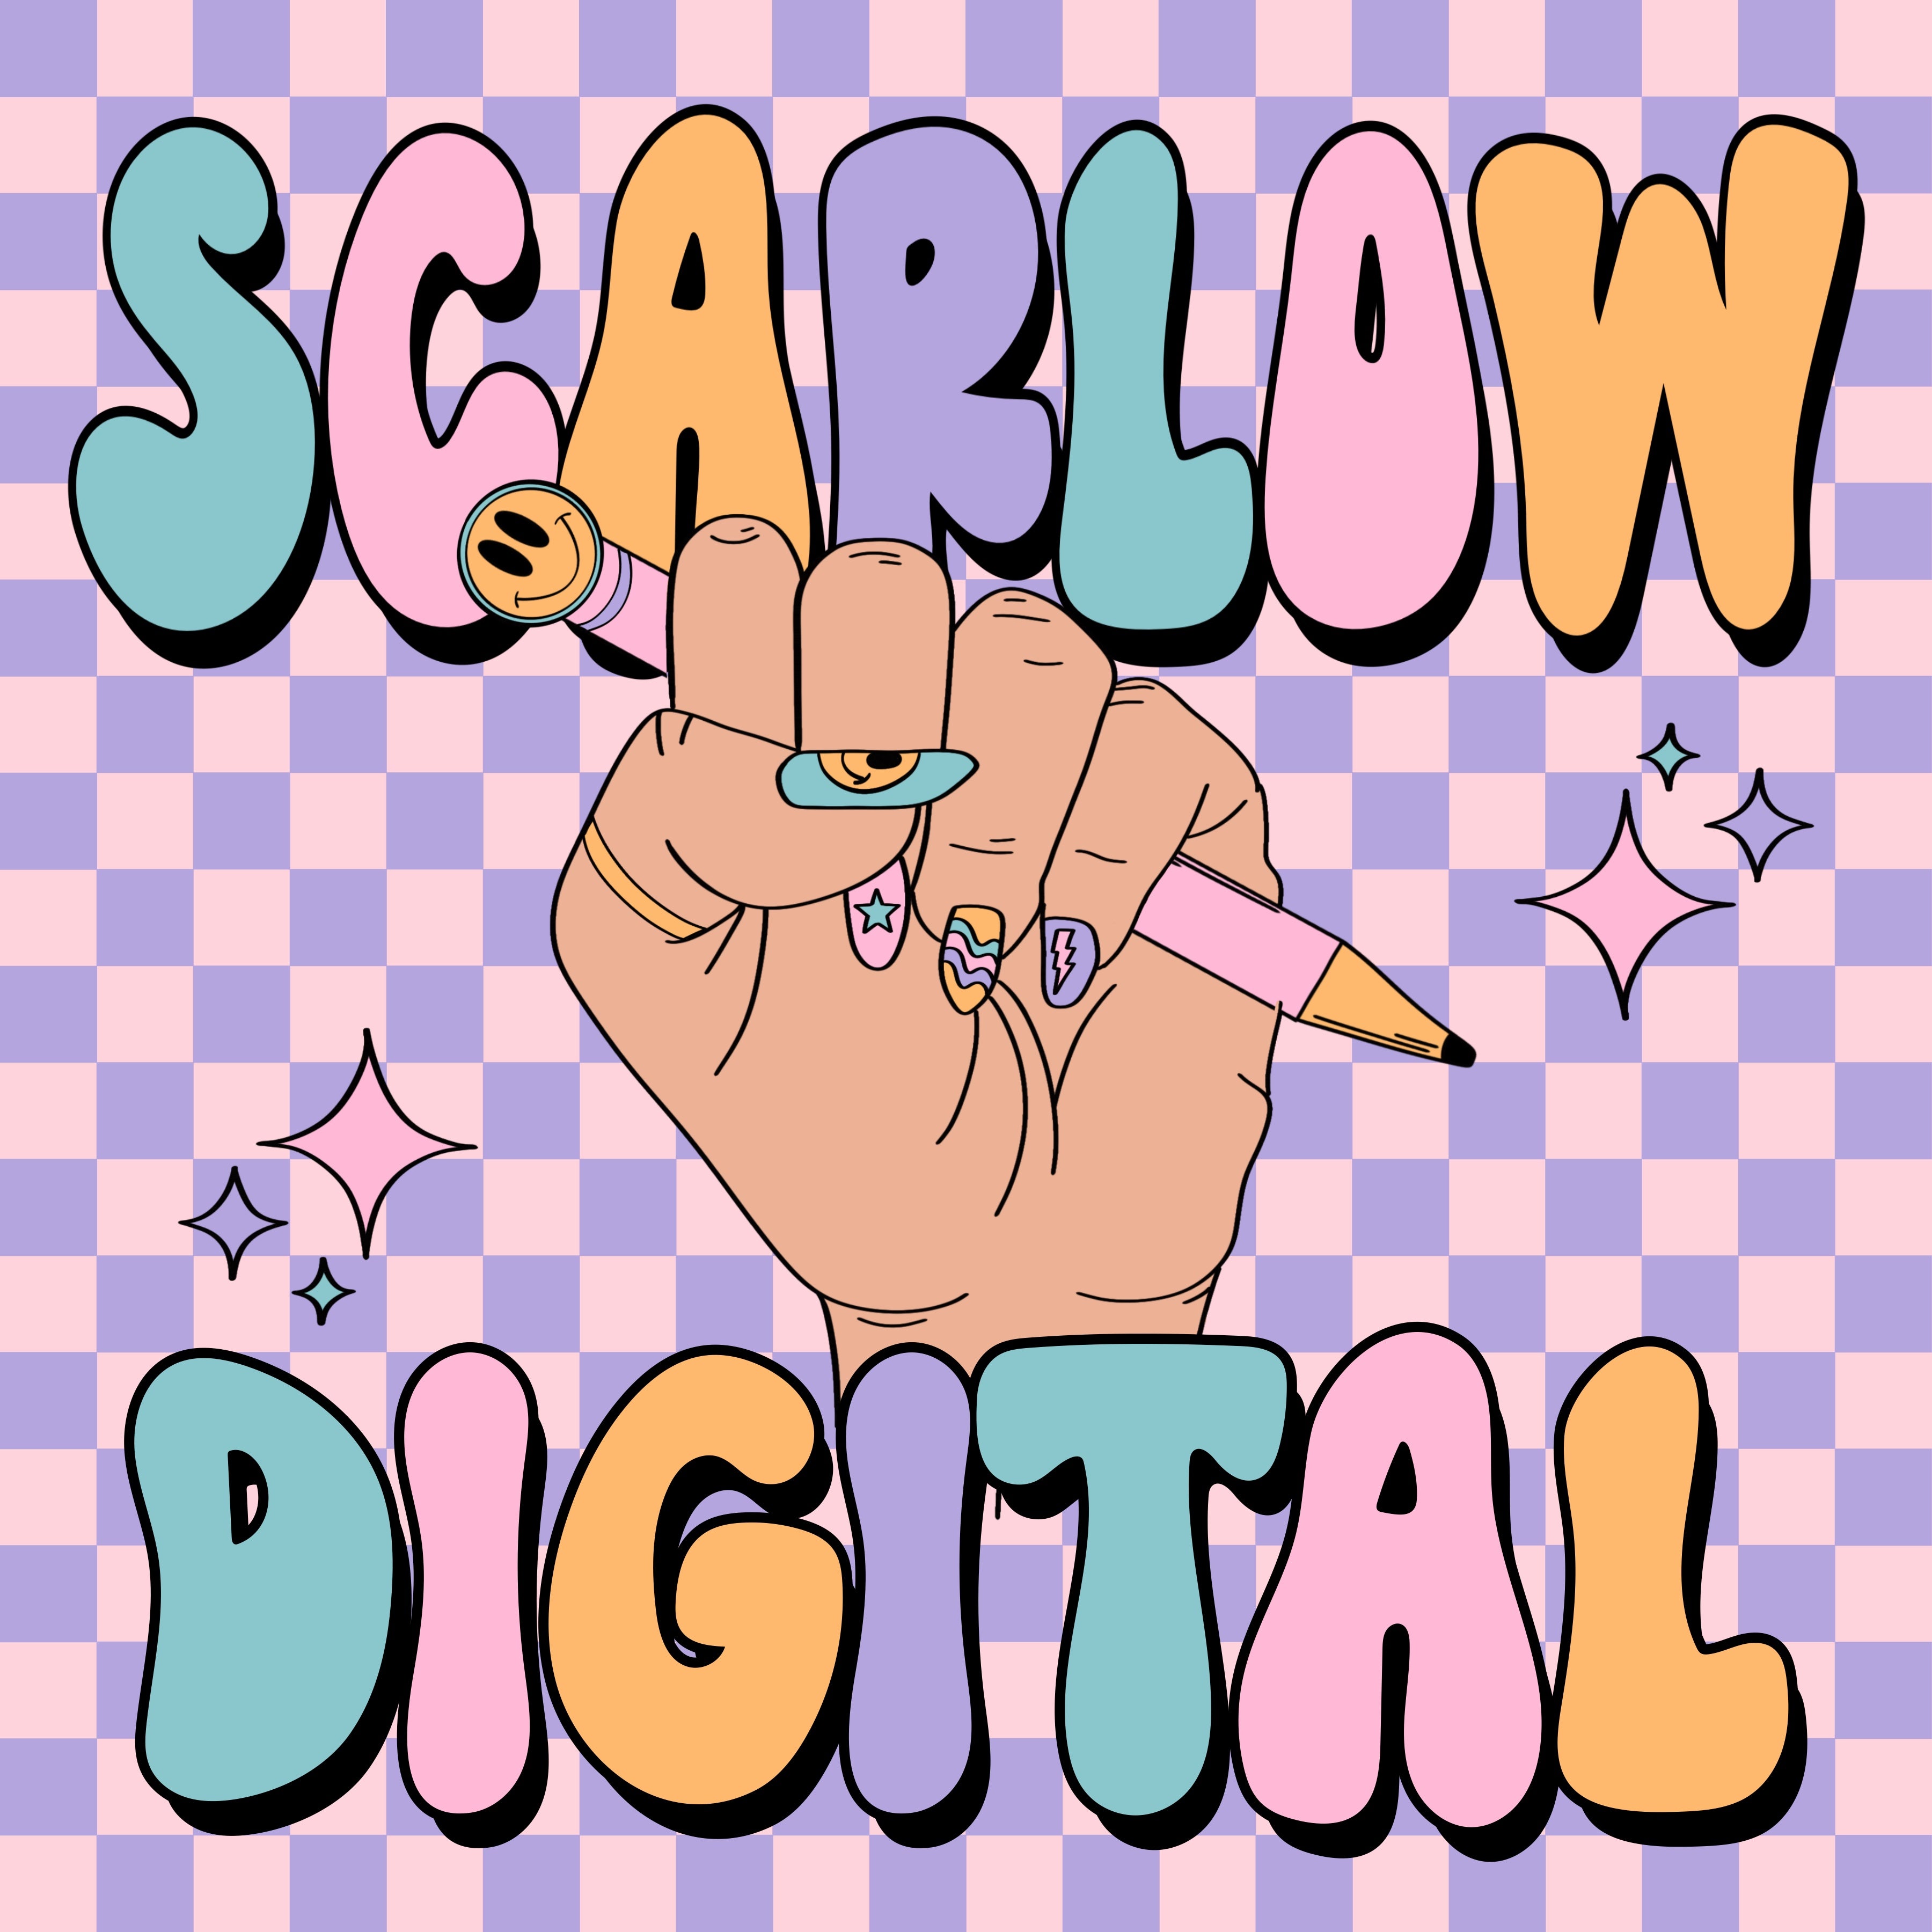 Scarlow Digital